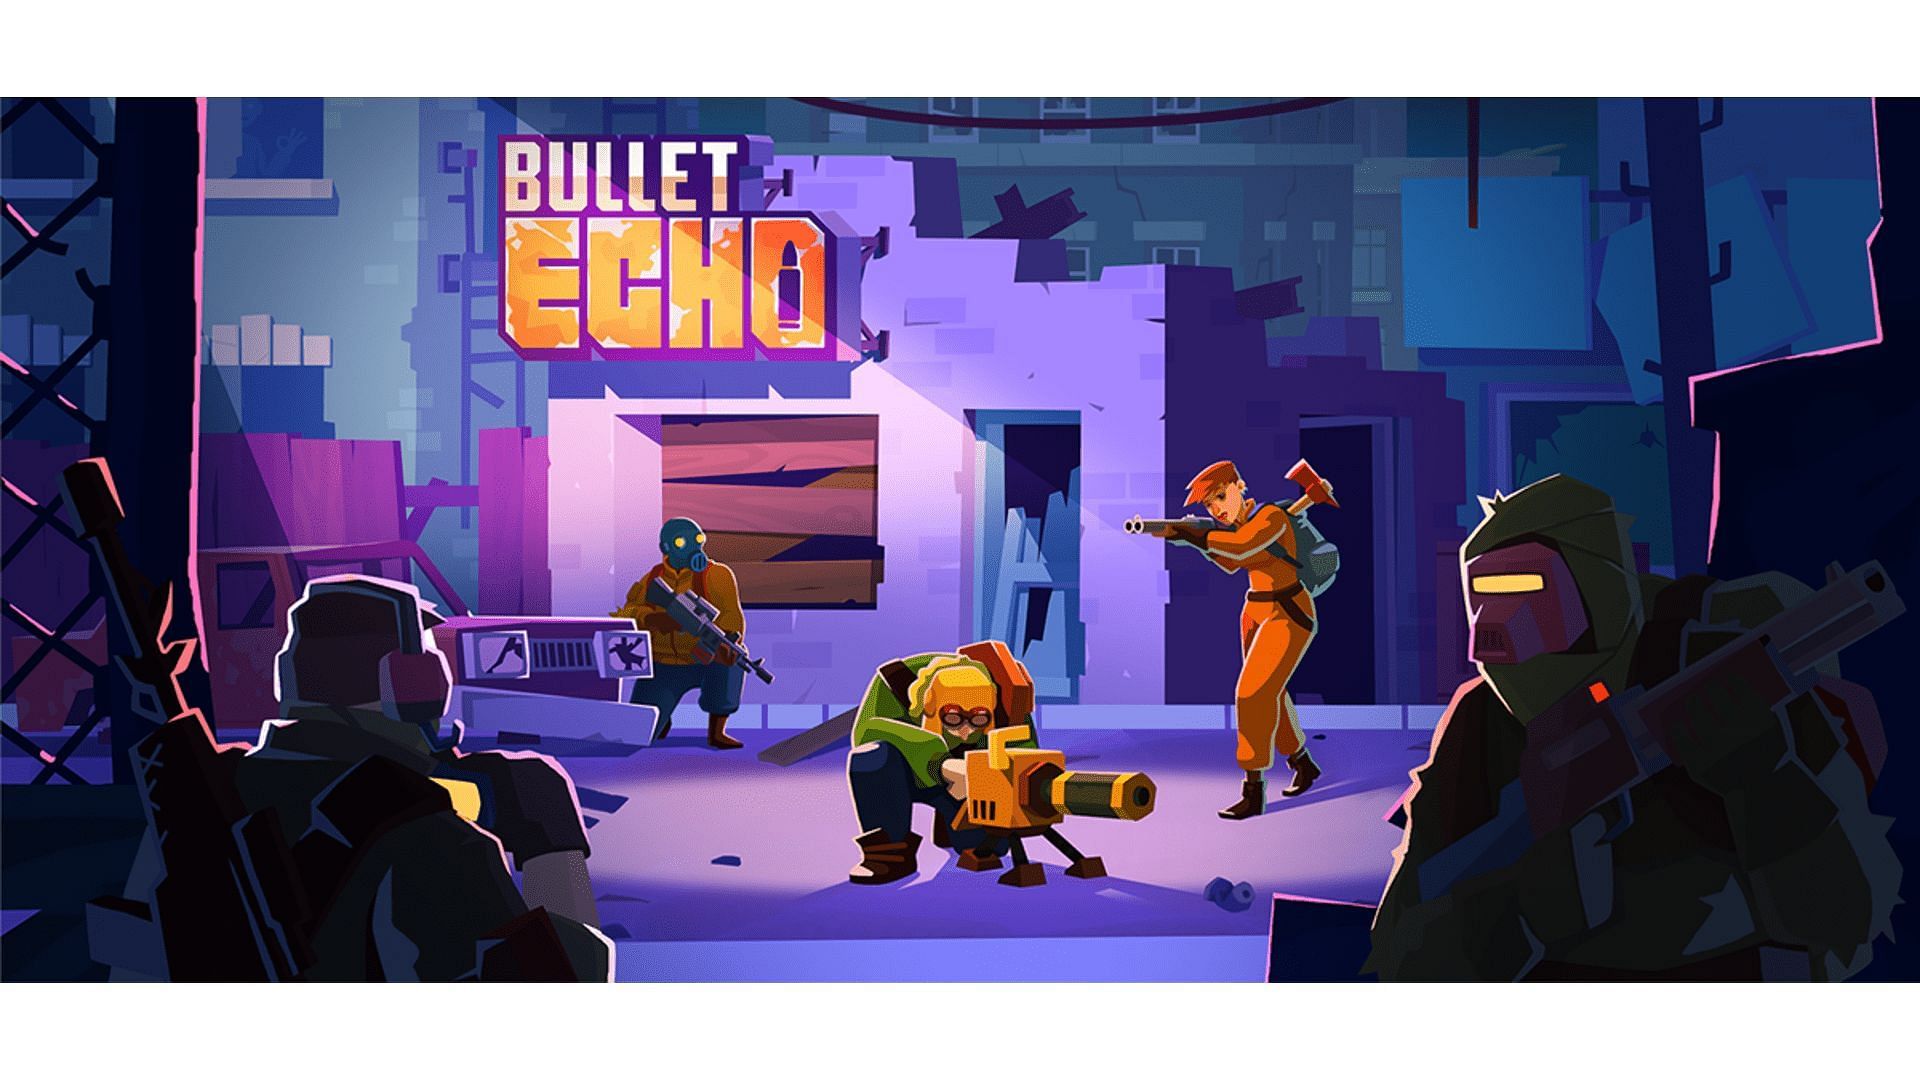 Bullet Echo (Image via Krafton India)